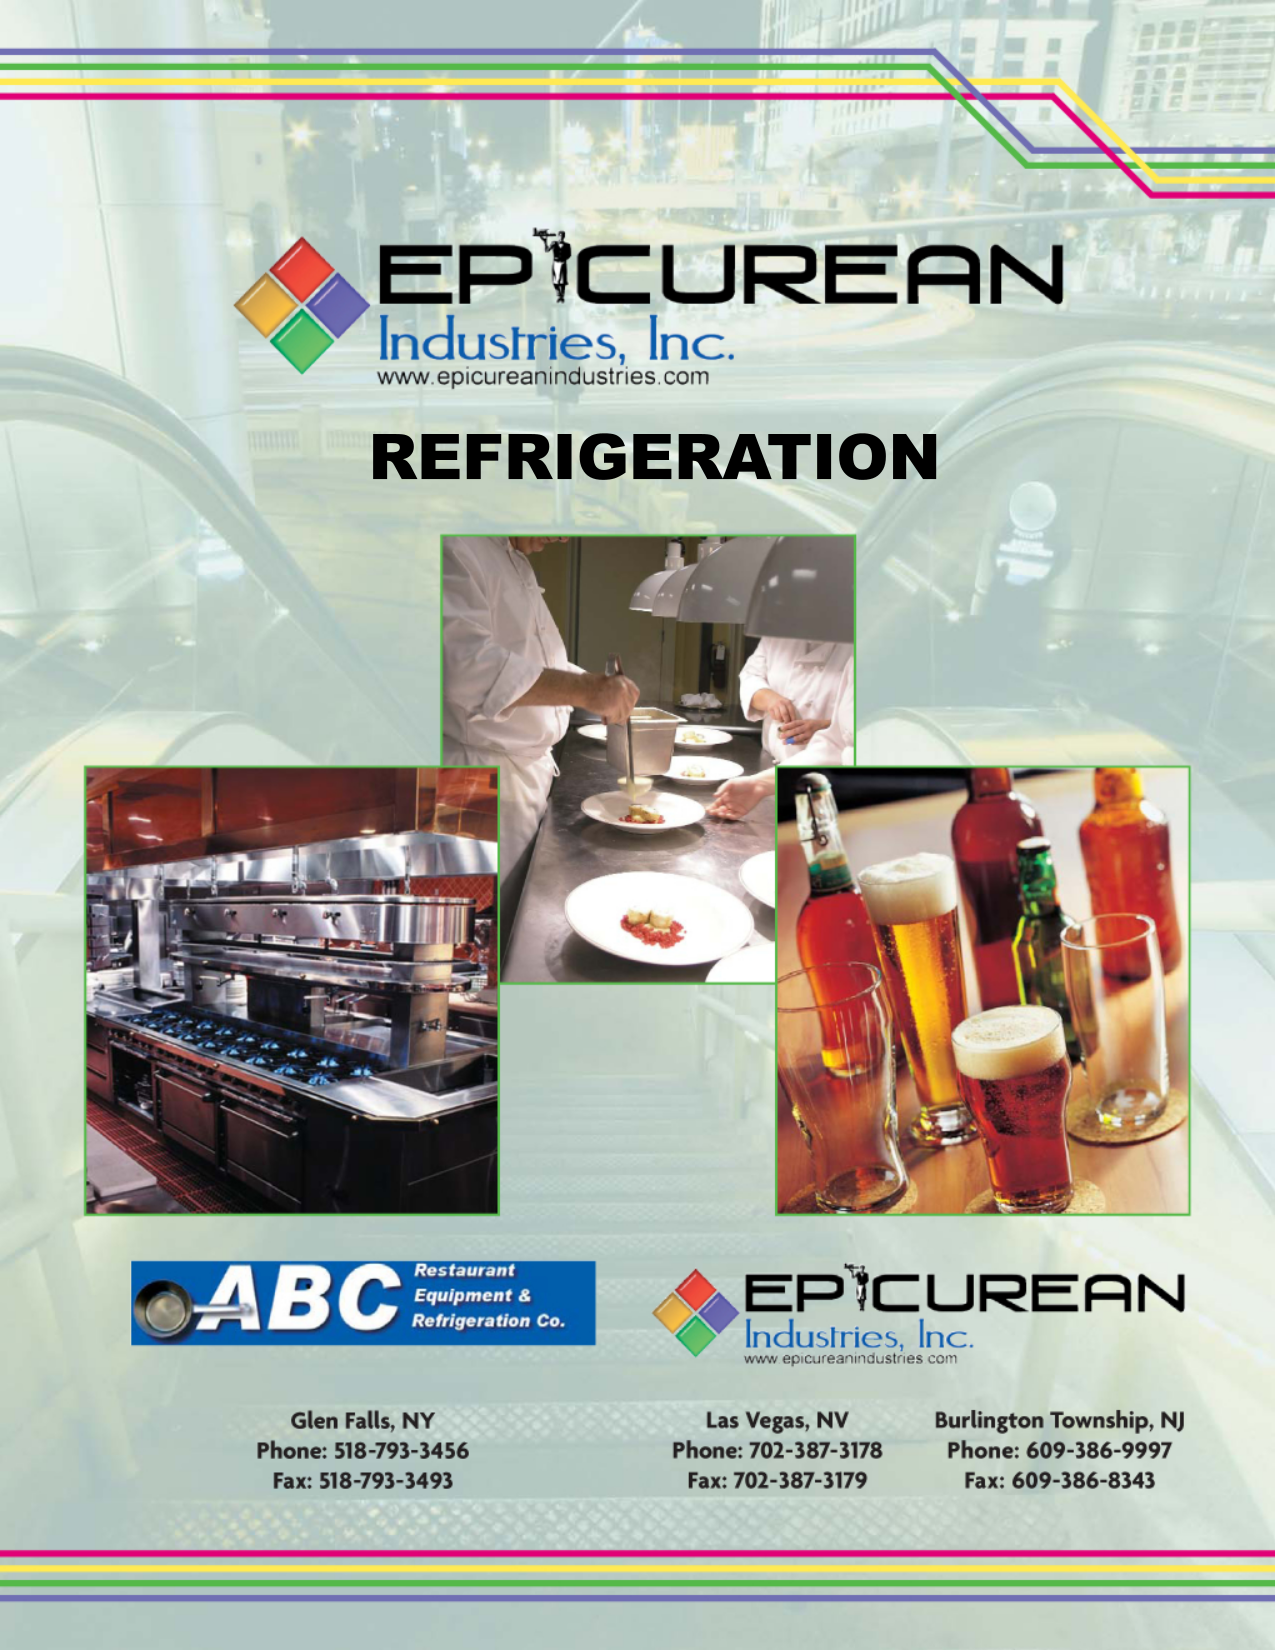 pdf for True Refrigerator TG1RRI-1G manual